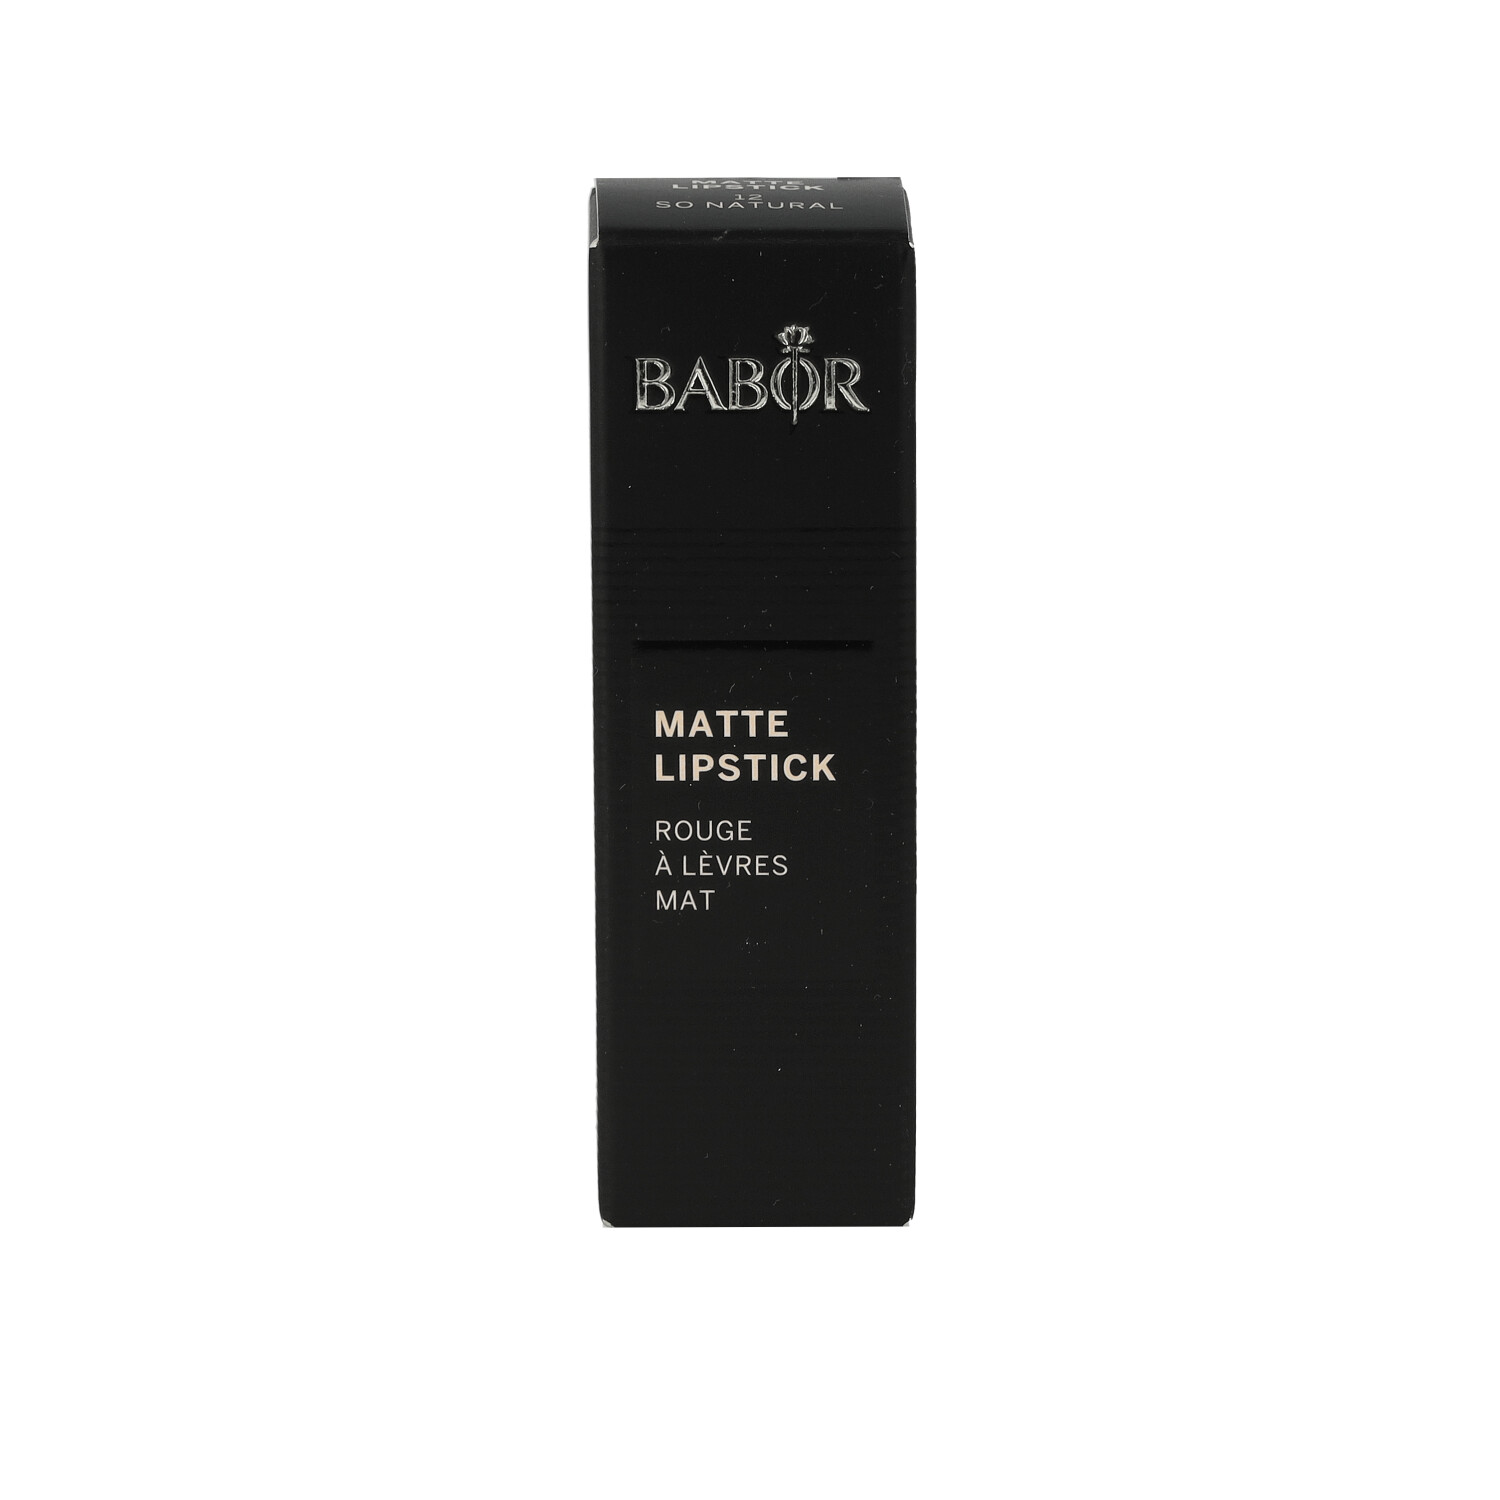 BABOR Matte Lipstick 12 so natural